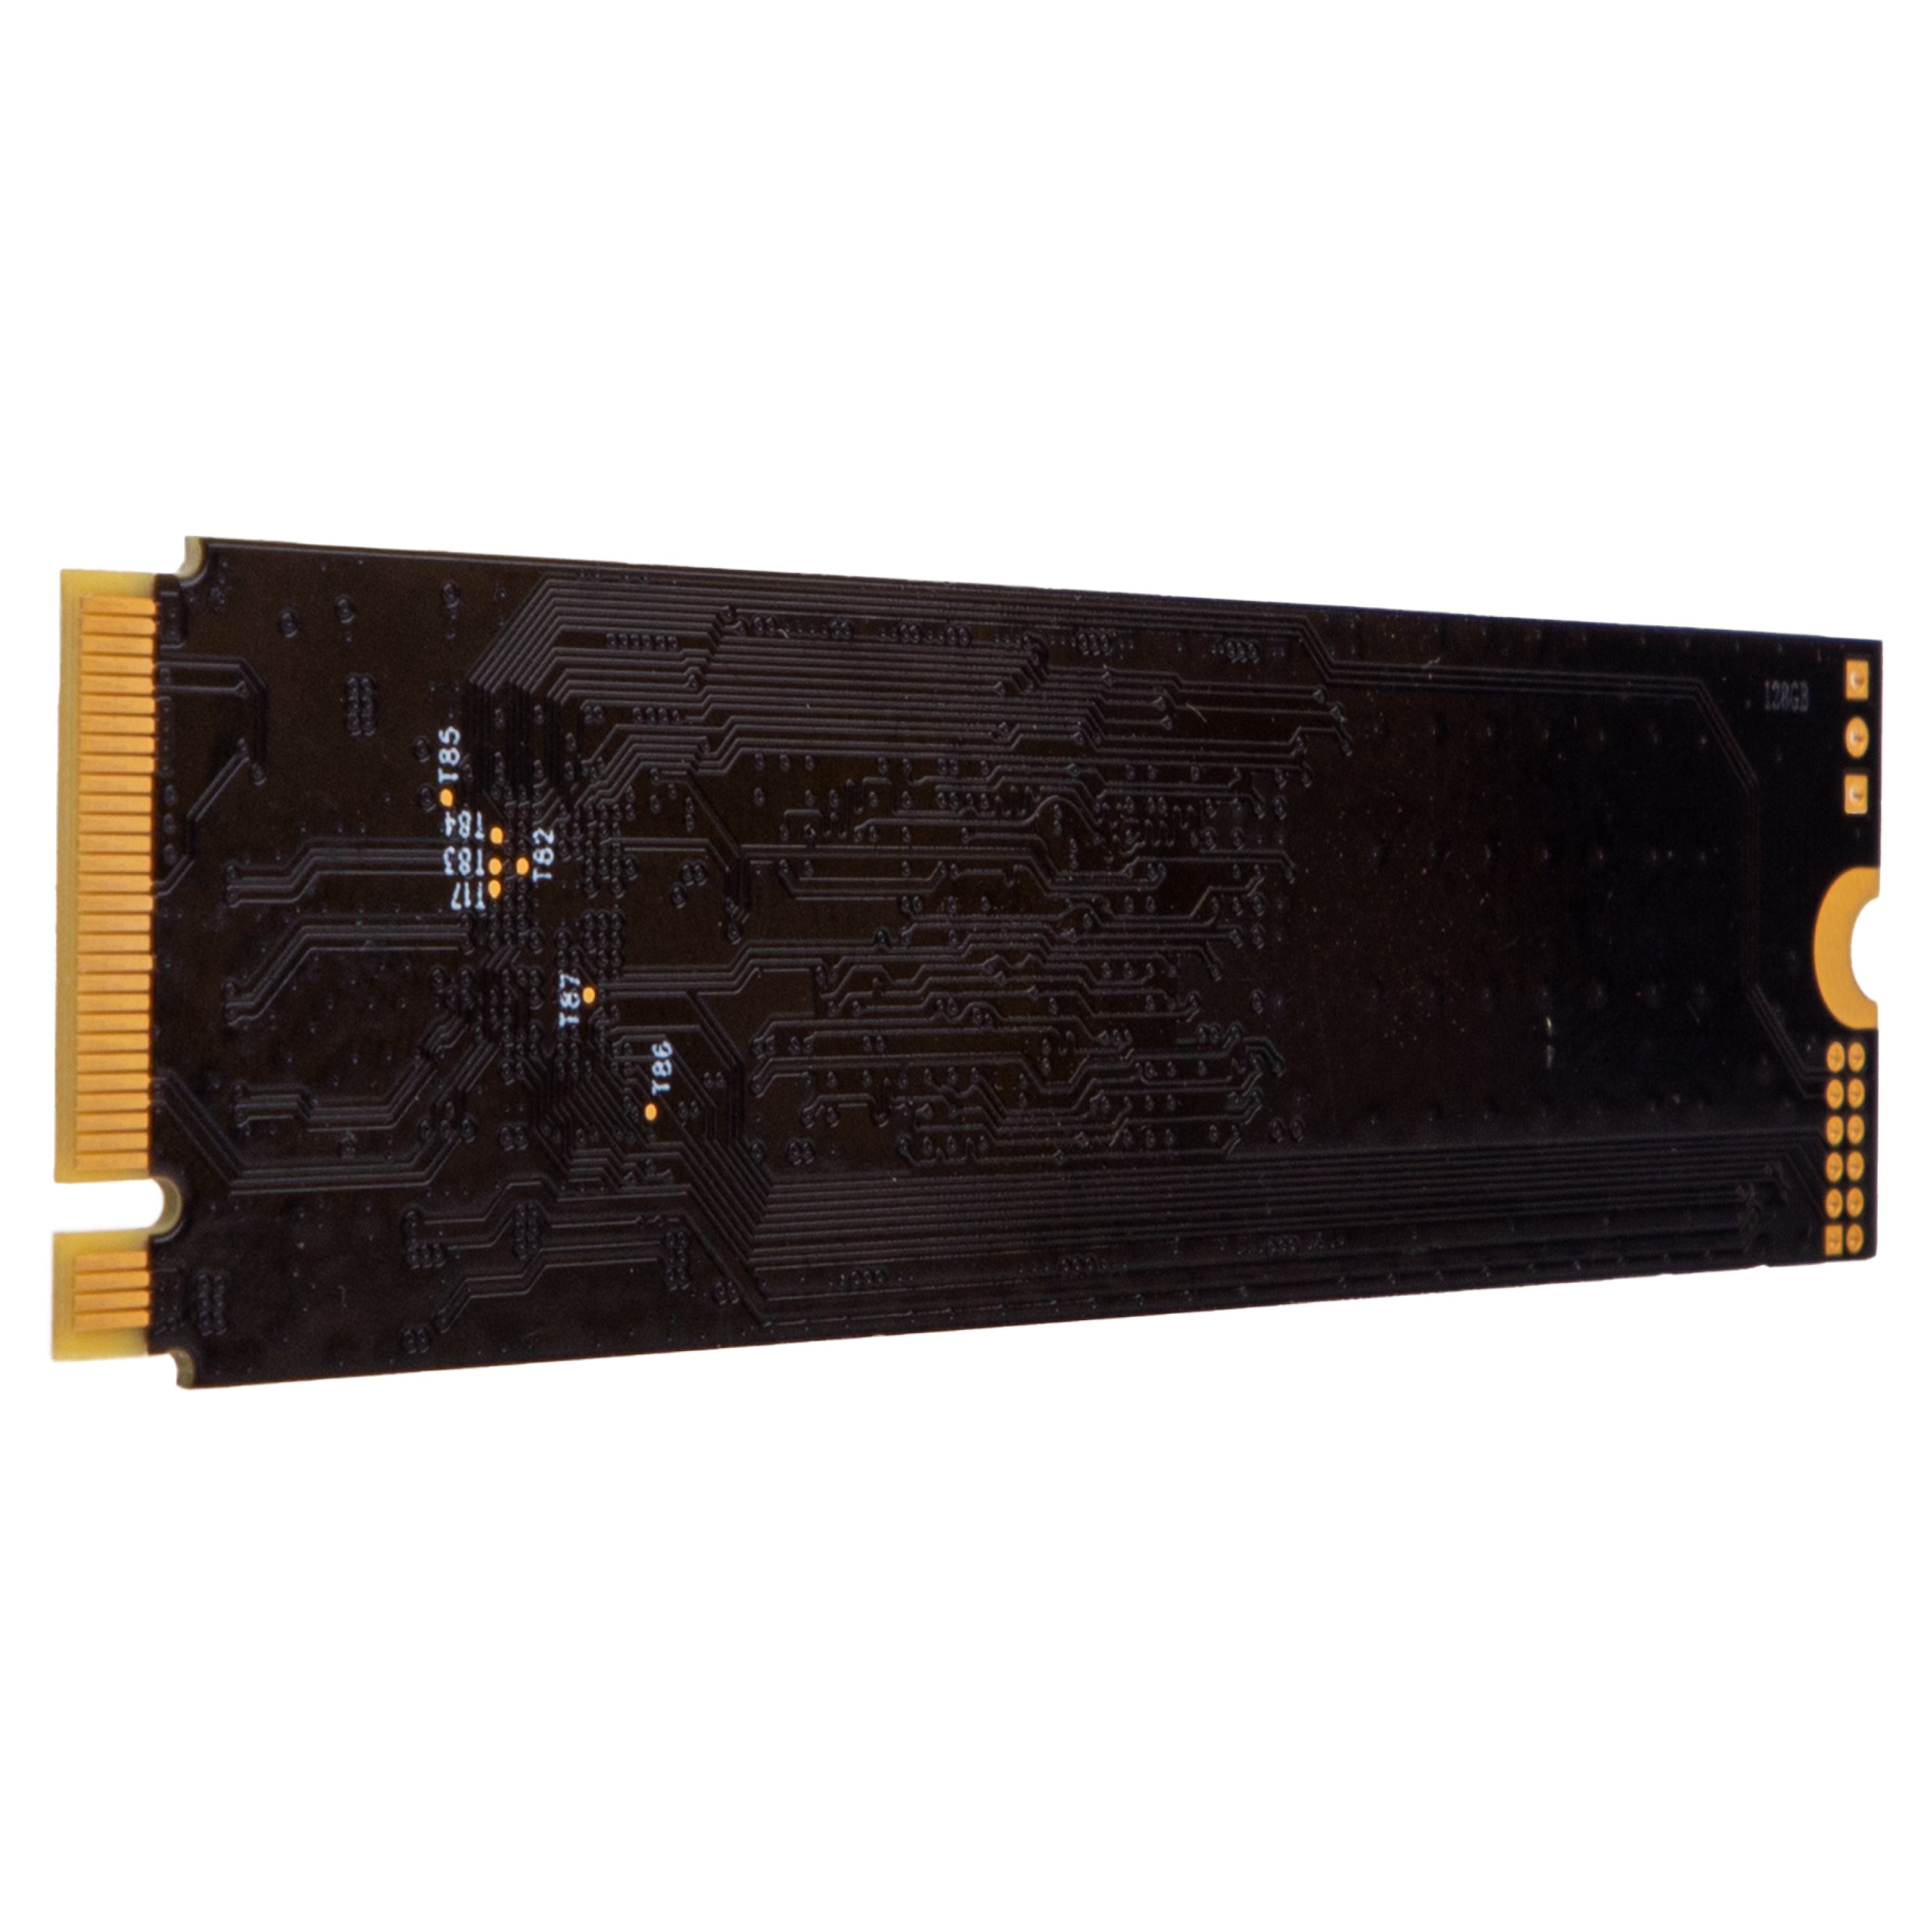 M.2. PCIE NVME 256 GB SSD